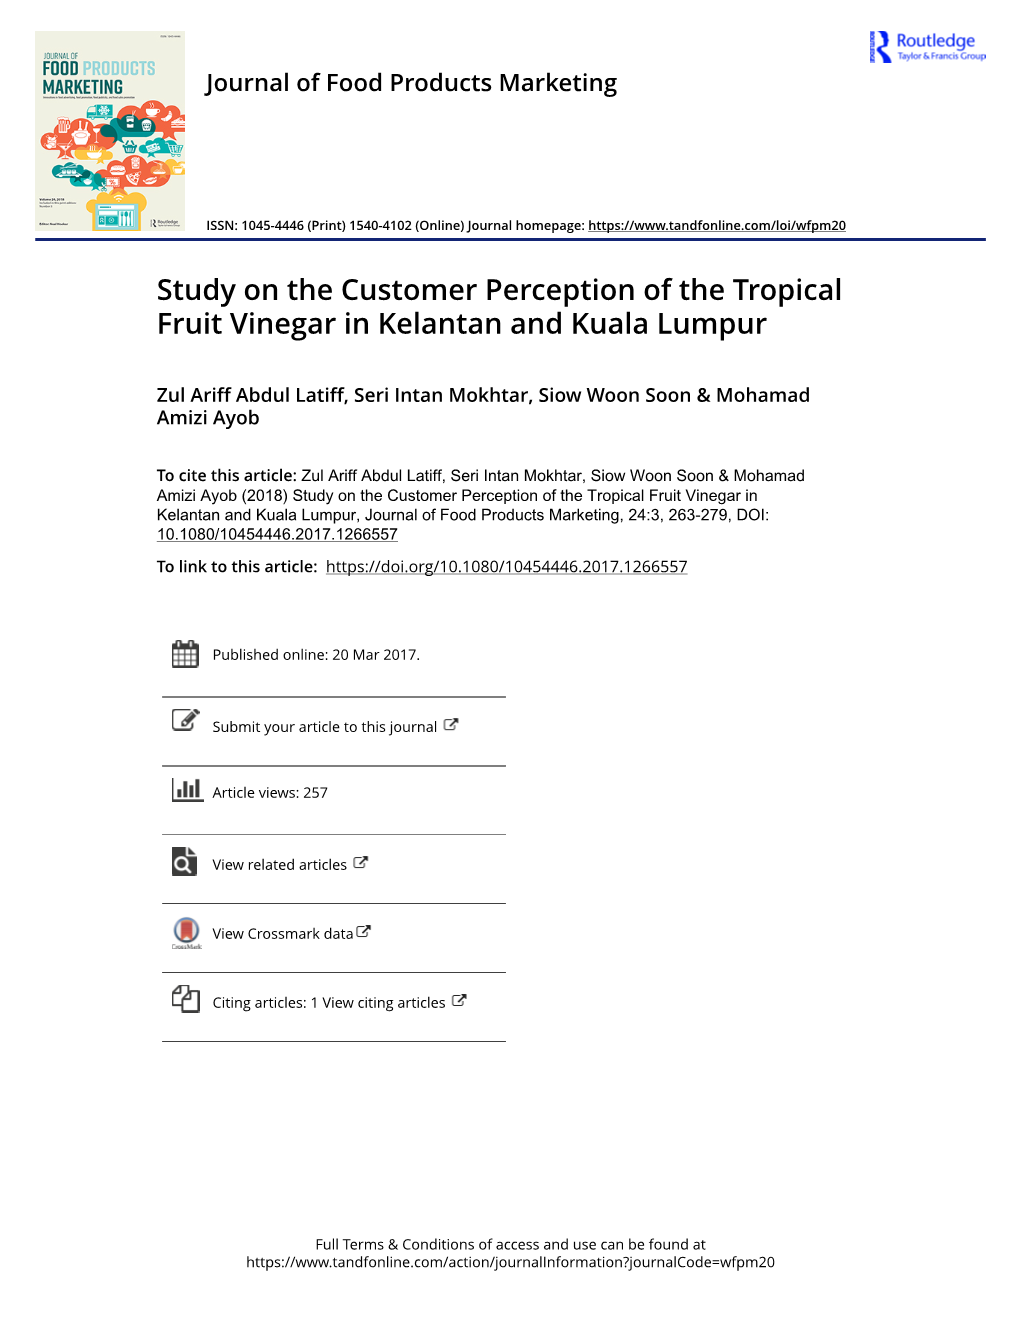 Study on the Customer Perception of the Tropical Fruit Vinegar in Kelantan and Kuala Lumpur